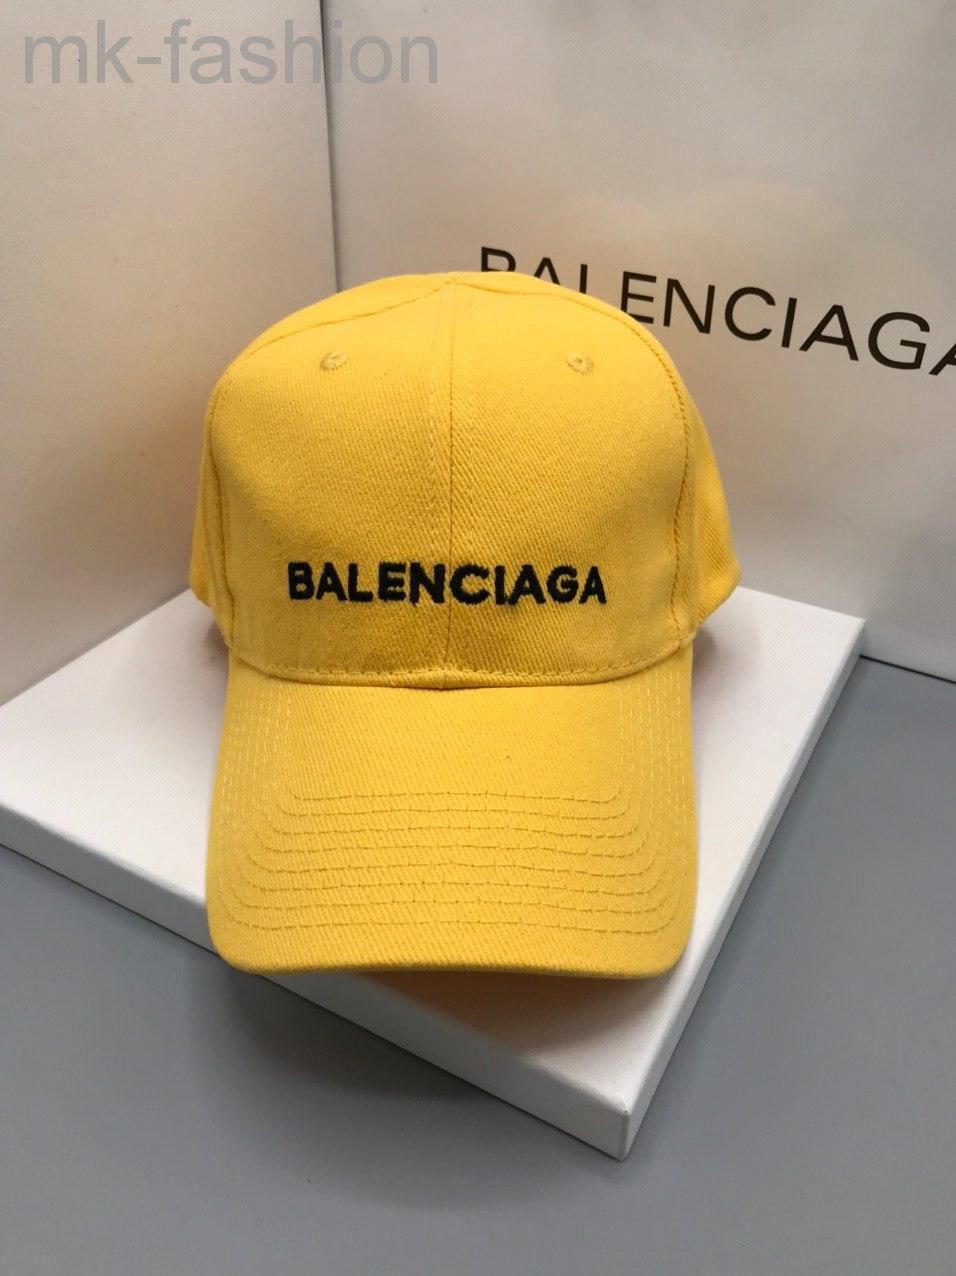 Balenciaga cap (Кристобаль Баленсиага)